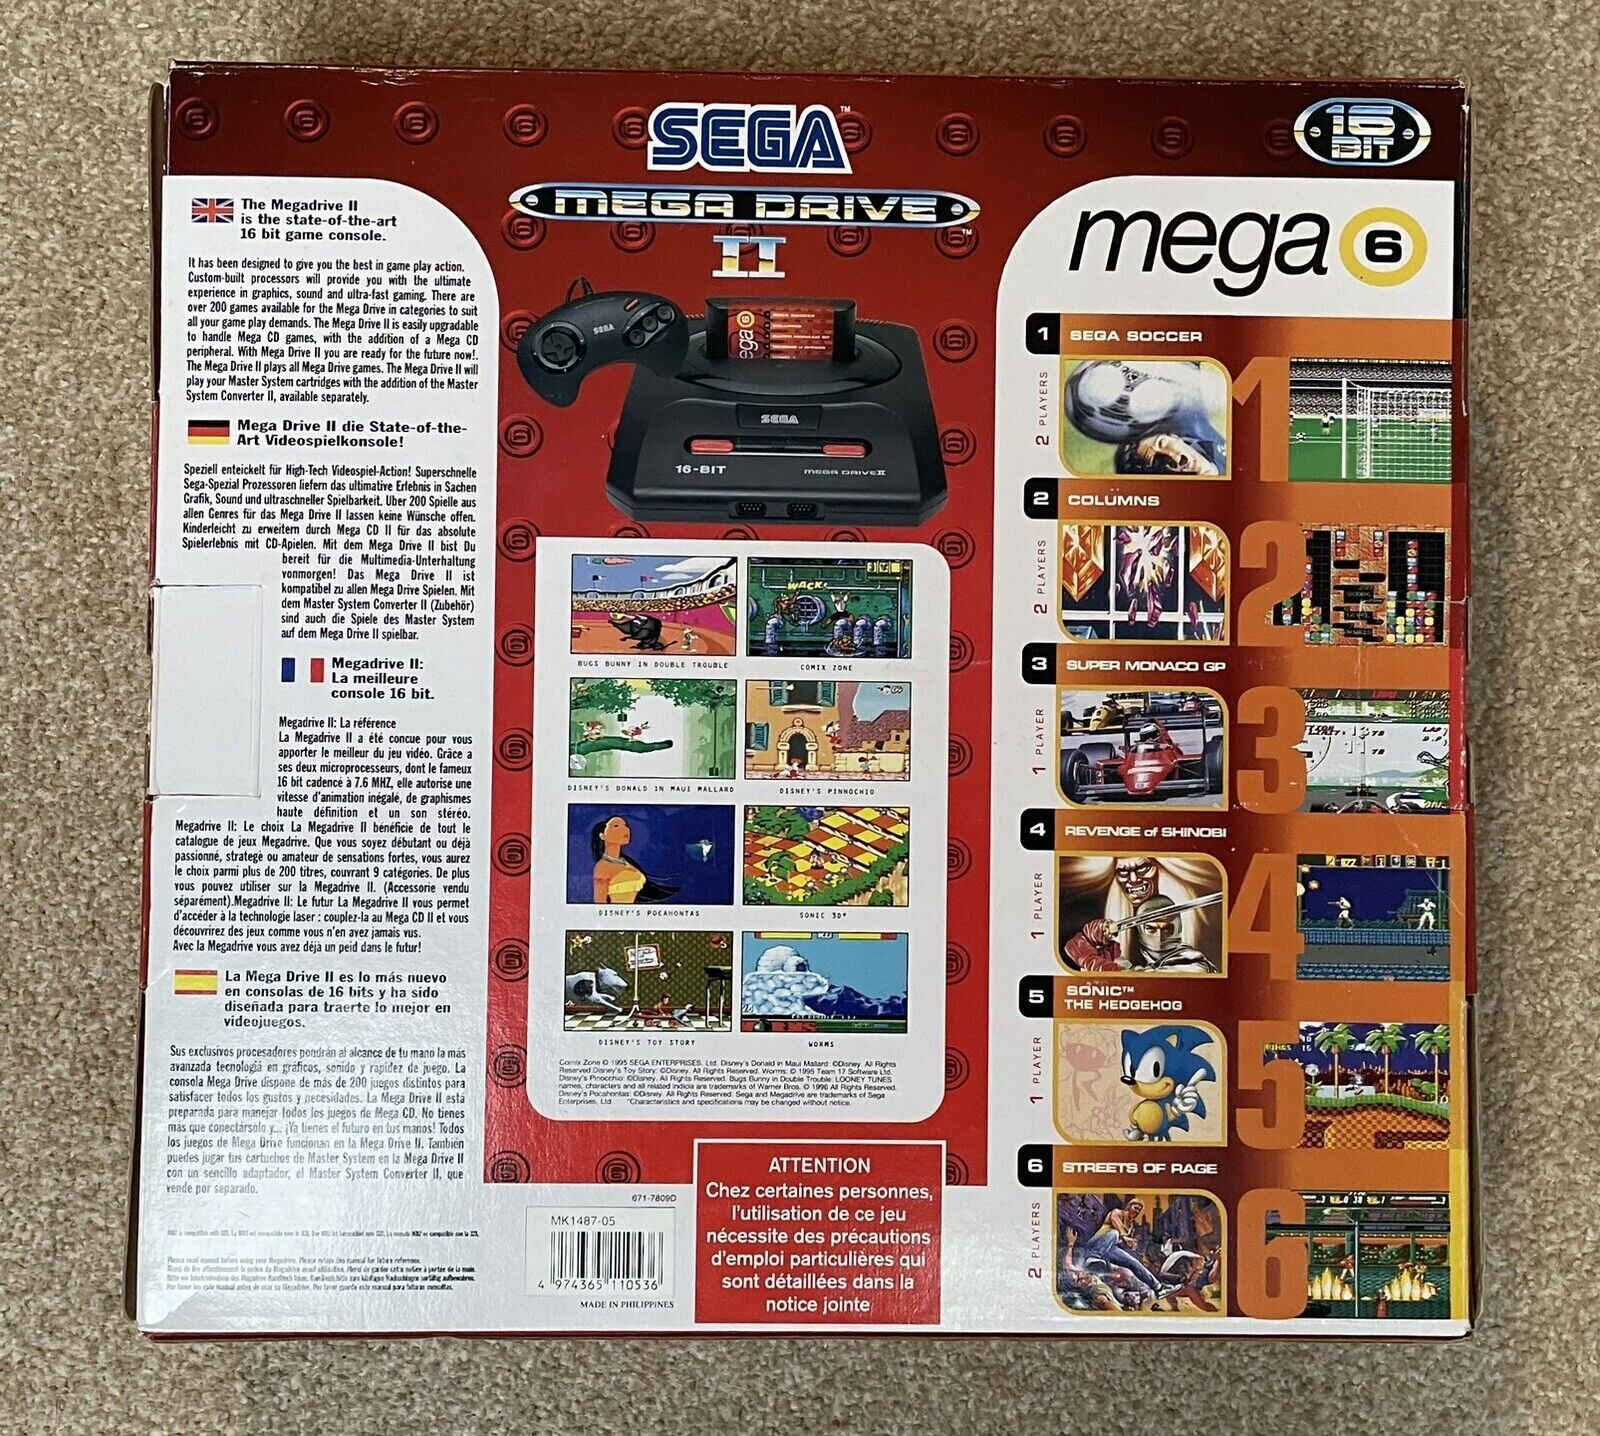 Sega Mega Drive II Mega 6 Pack